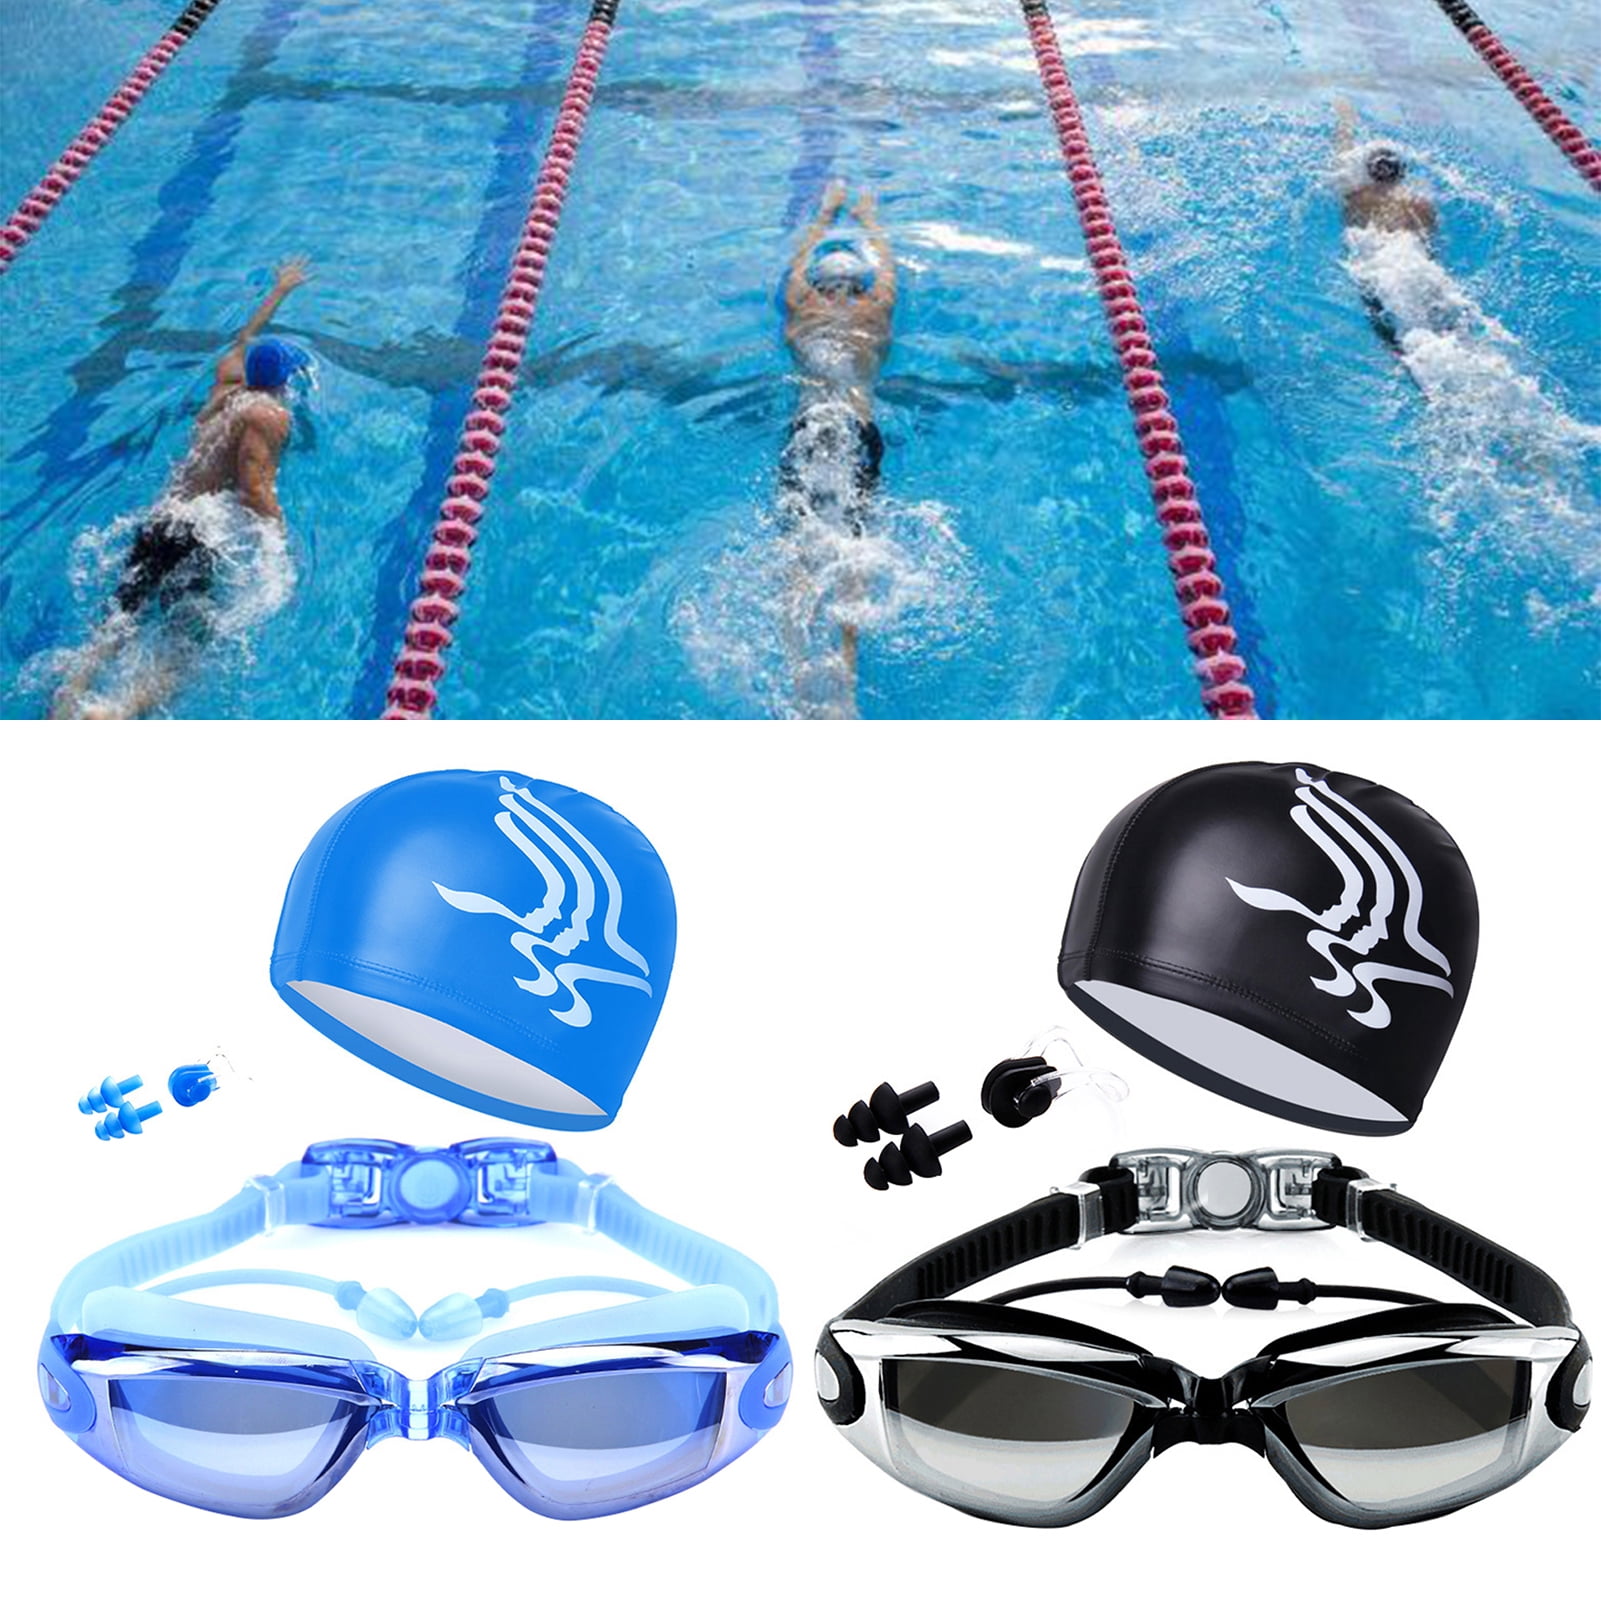 EG_ Swim Goggles with Hat Ear Plug Nose Clip Suit Swimming Glasses Anti-fog Film 